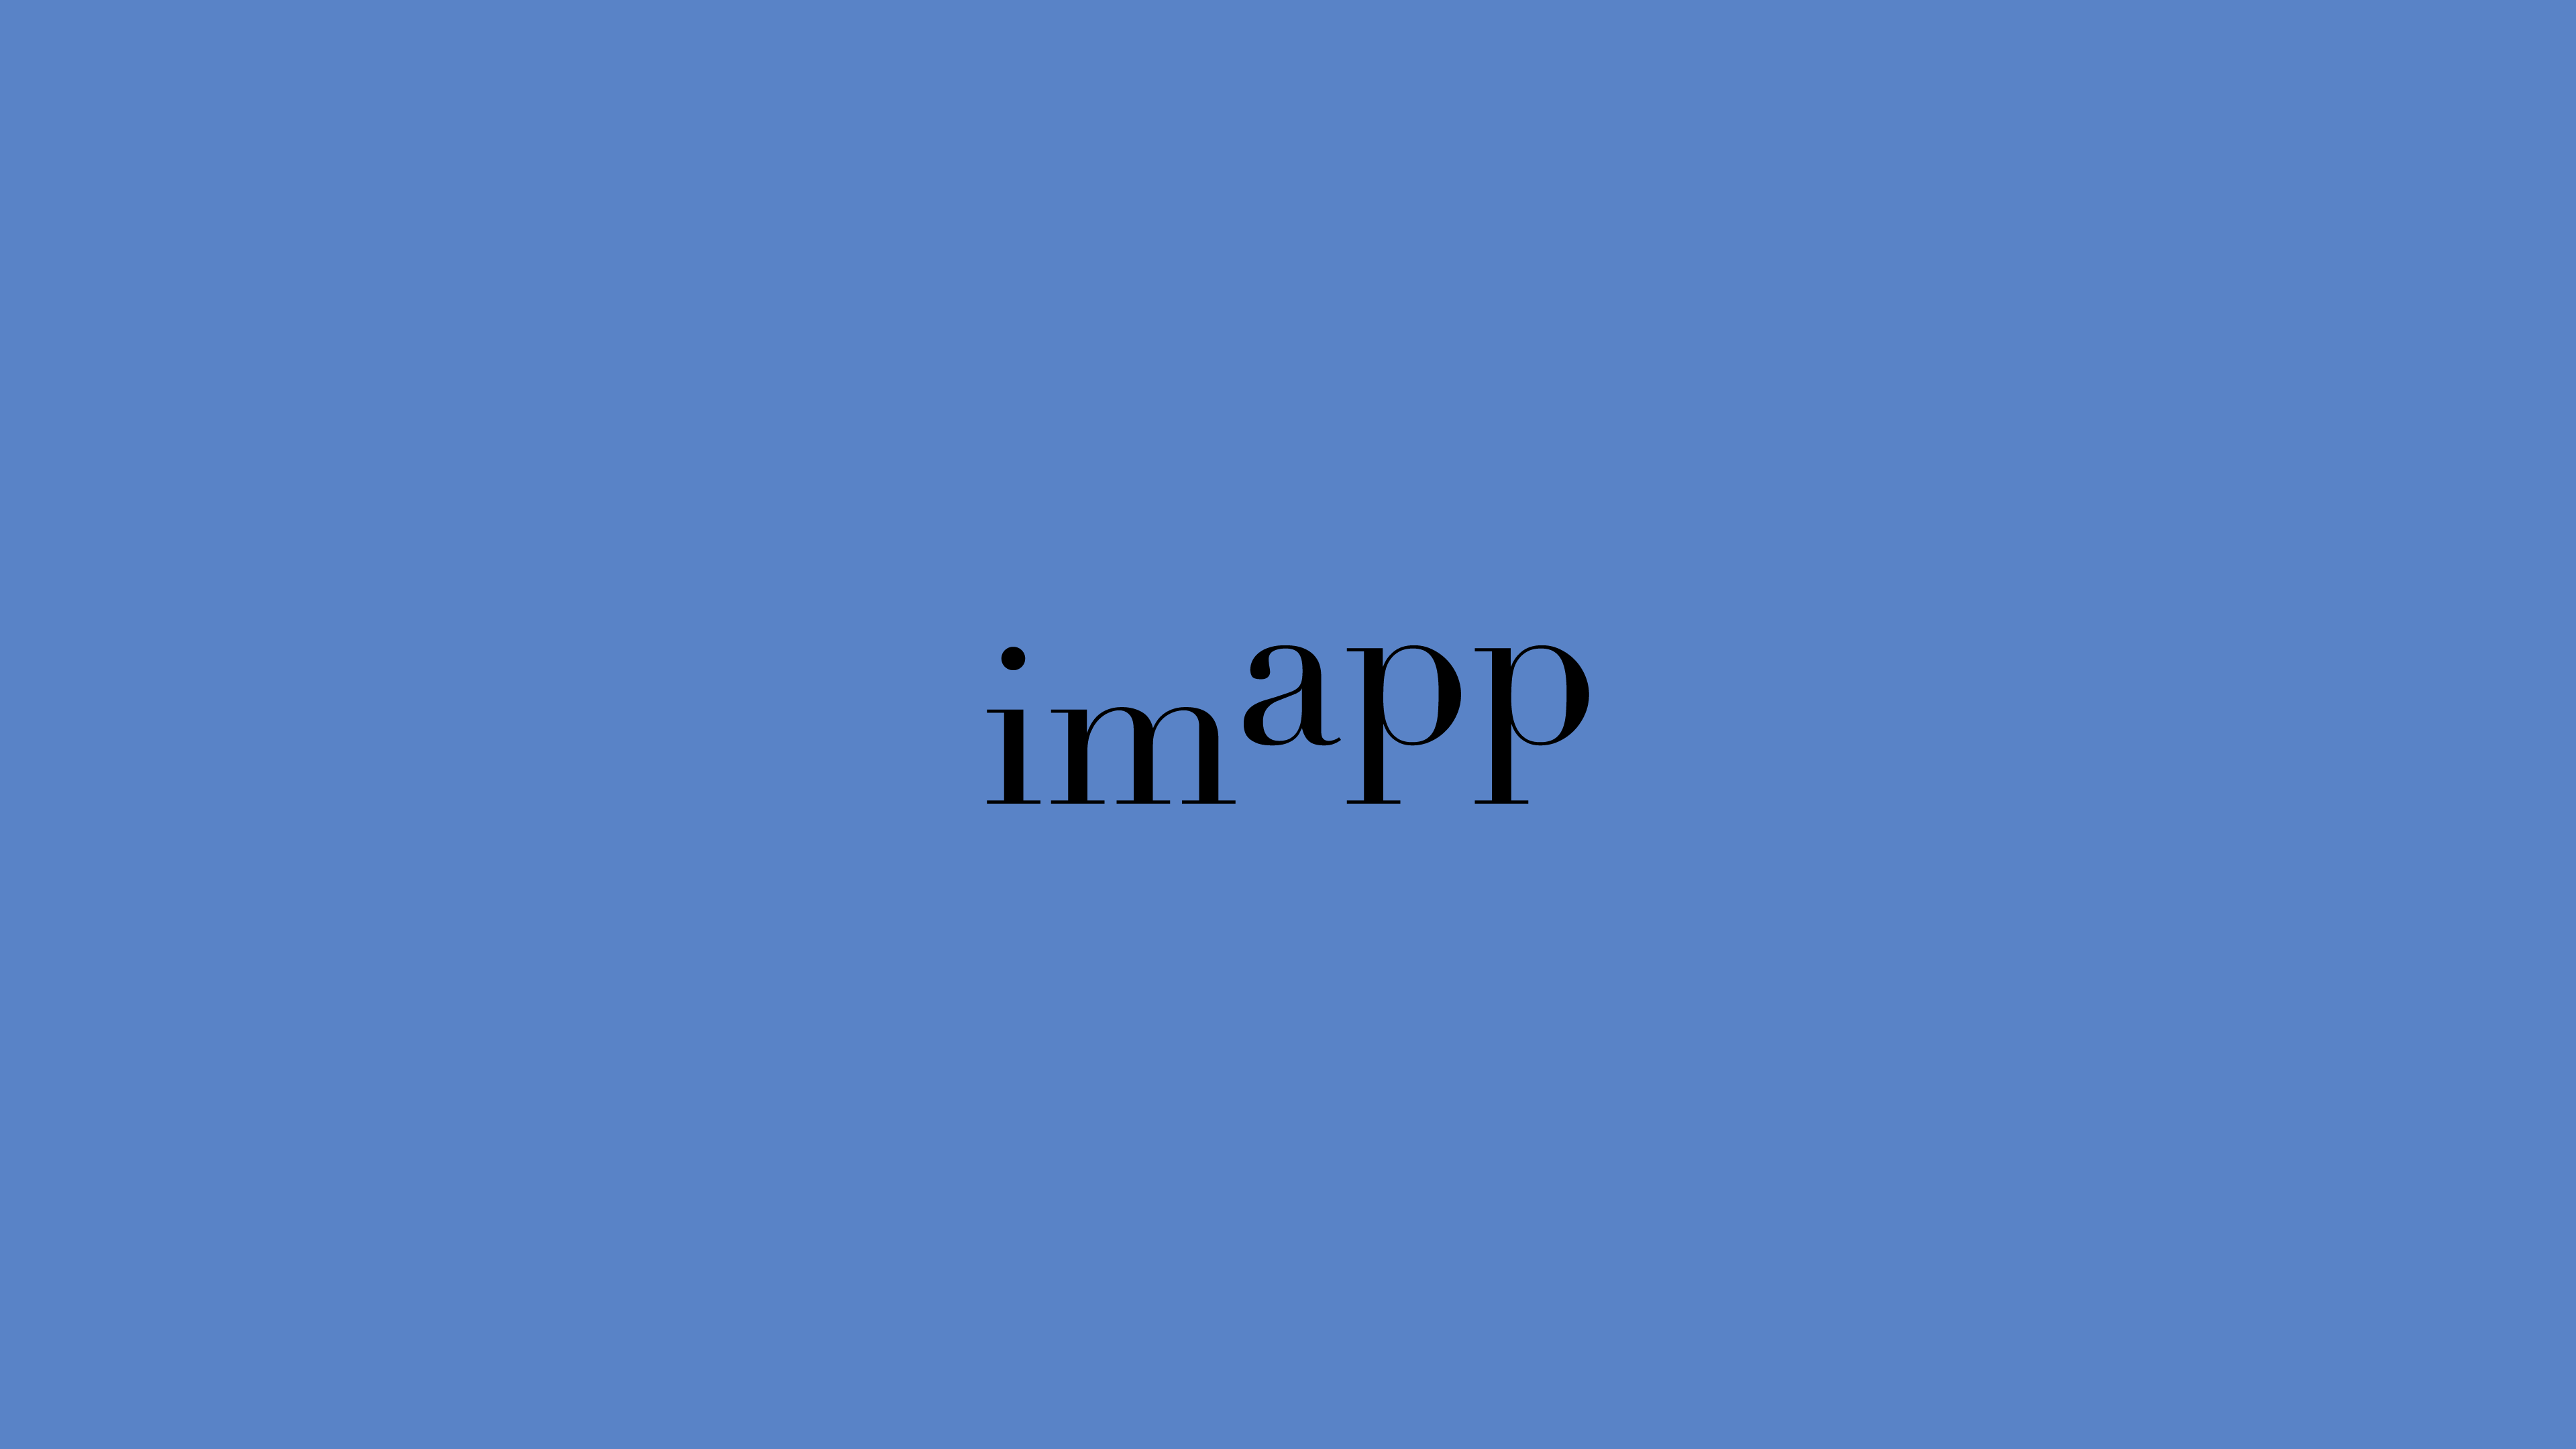 imapp - The Codeine Design